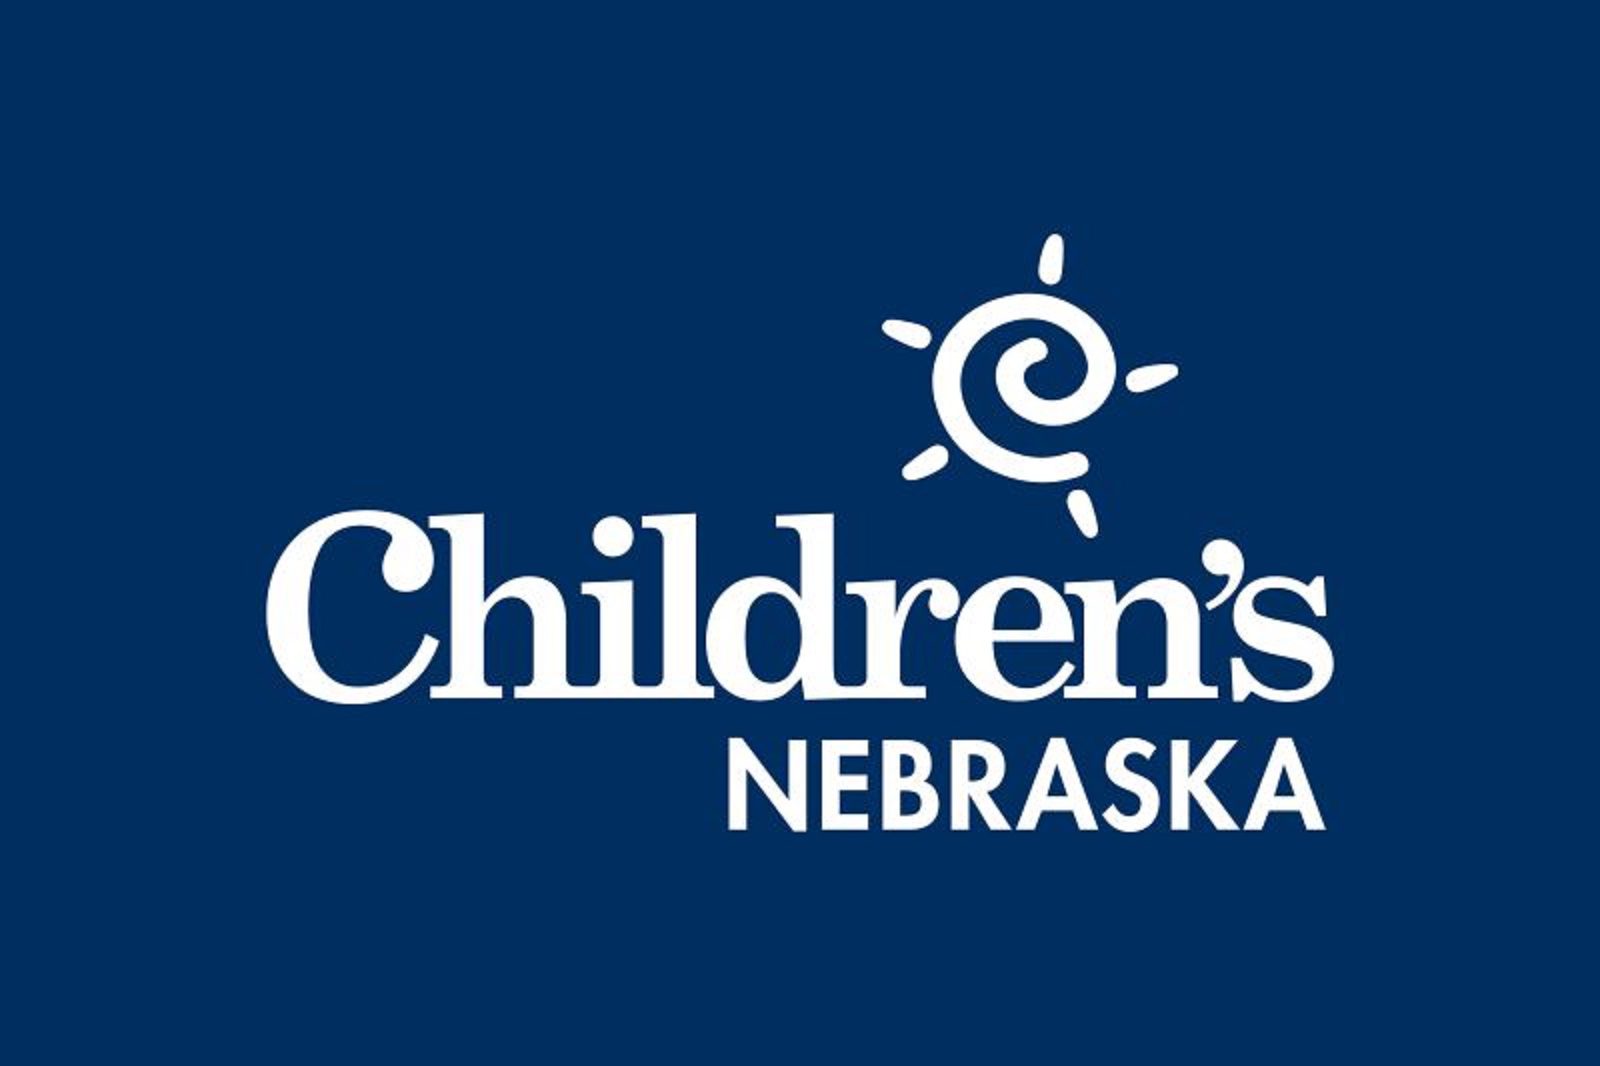 Children’s Nebraska Elevates Provider Experience with Workforce Management Tools